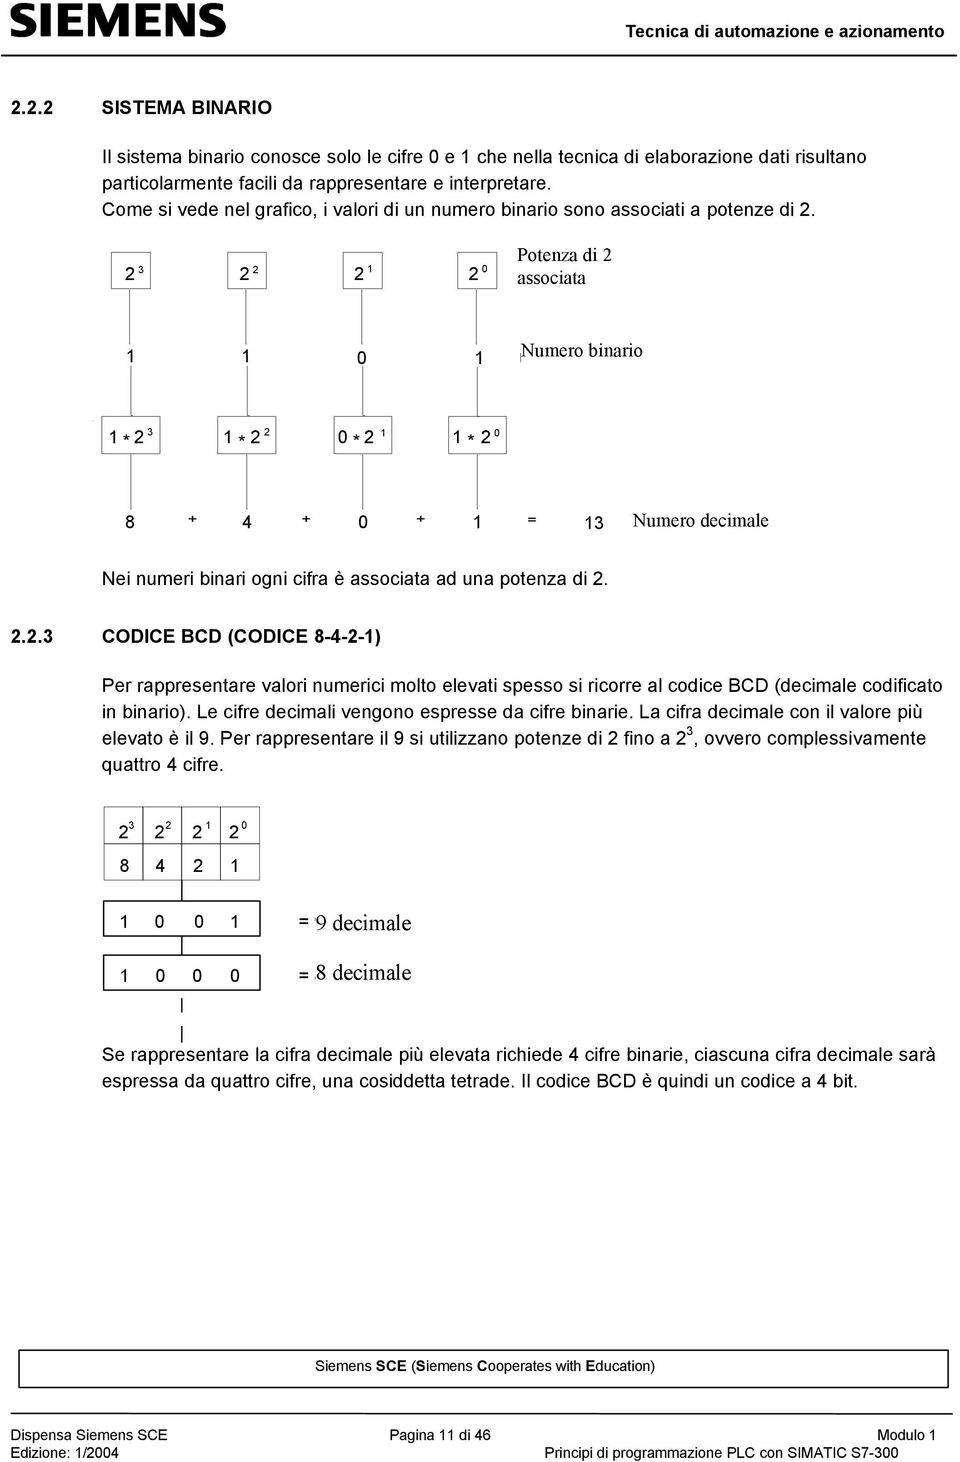 2 3 2 2 2 2 Potenza Zugeordnete di 2 associata Zehnerpotenz Numero binario Dualzahl 3 2 * 2 * 2 * 2 * 2 8 4 + + + Numero decimale = 3 Dezimalzahl Nei numeri binari ogni cifra è associata ad una